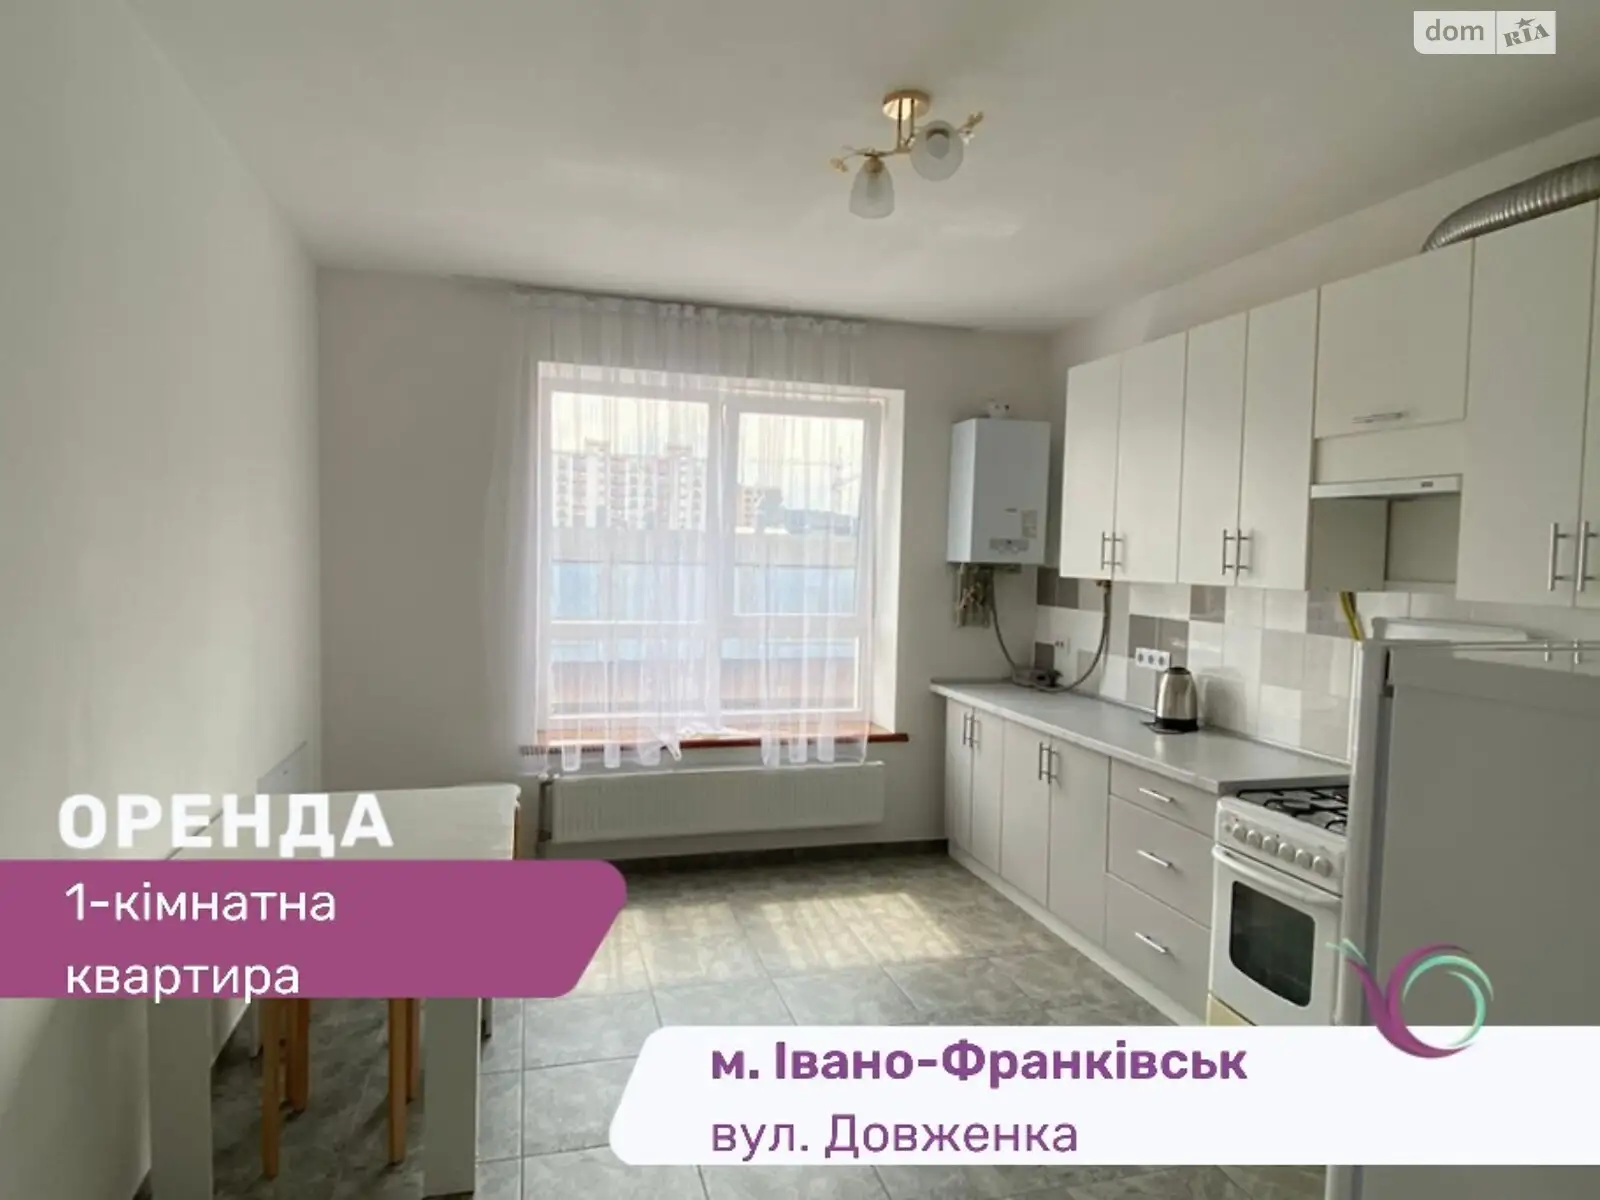 Сдается в аренду 1-комнатная квартира 40 кв. м в Ивано-Франковске, ул. Бобикевича А., 33